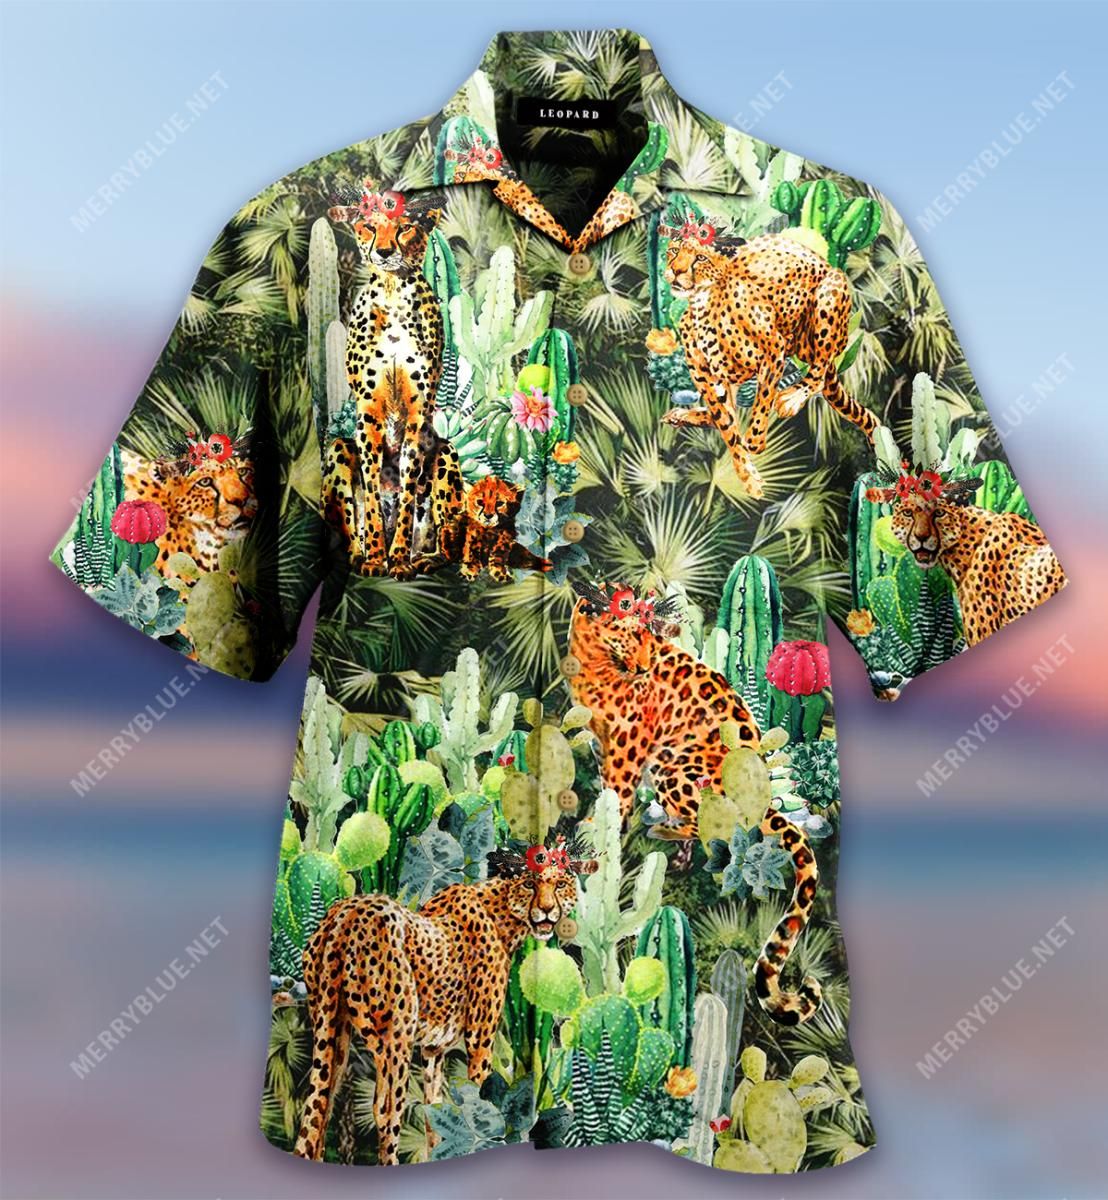 Leopard Is My Favorite Aloha Hawaiian Shirt Colorful Short Sleeve Summer Beach Casual Shirt For Men And Women